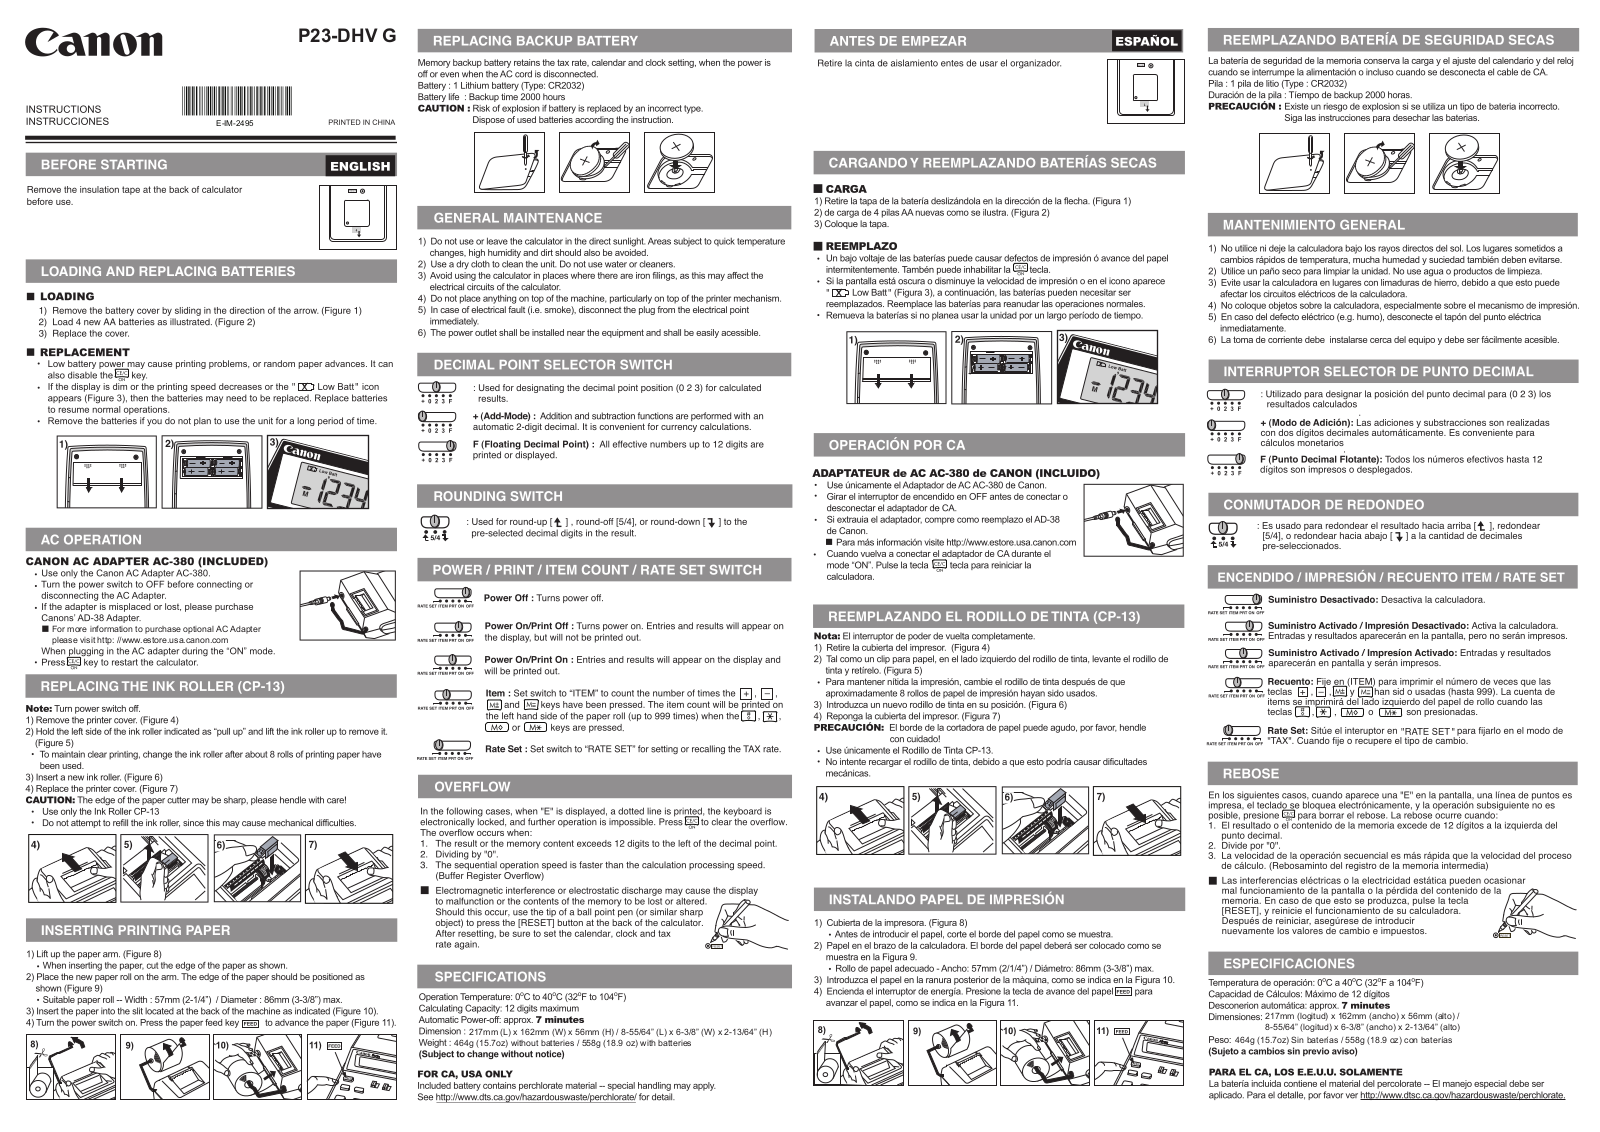 Canon P23-DHV G User Manual